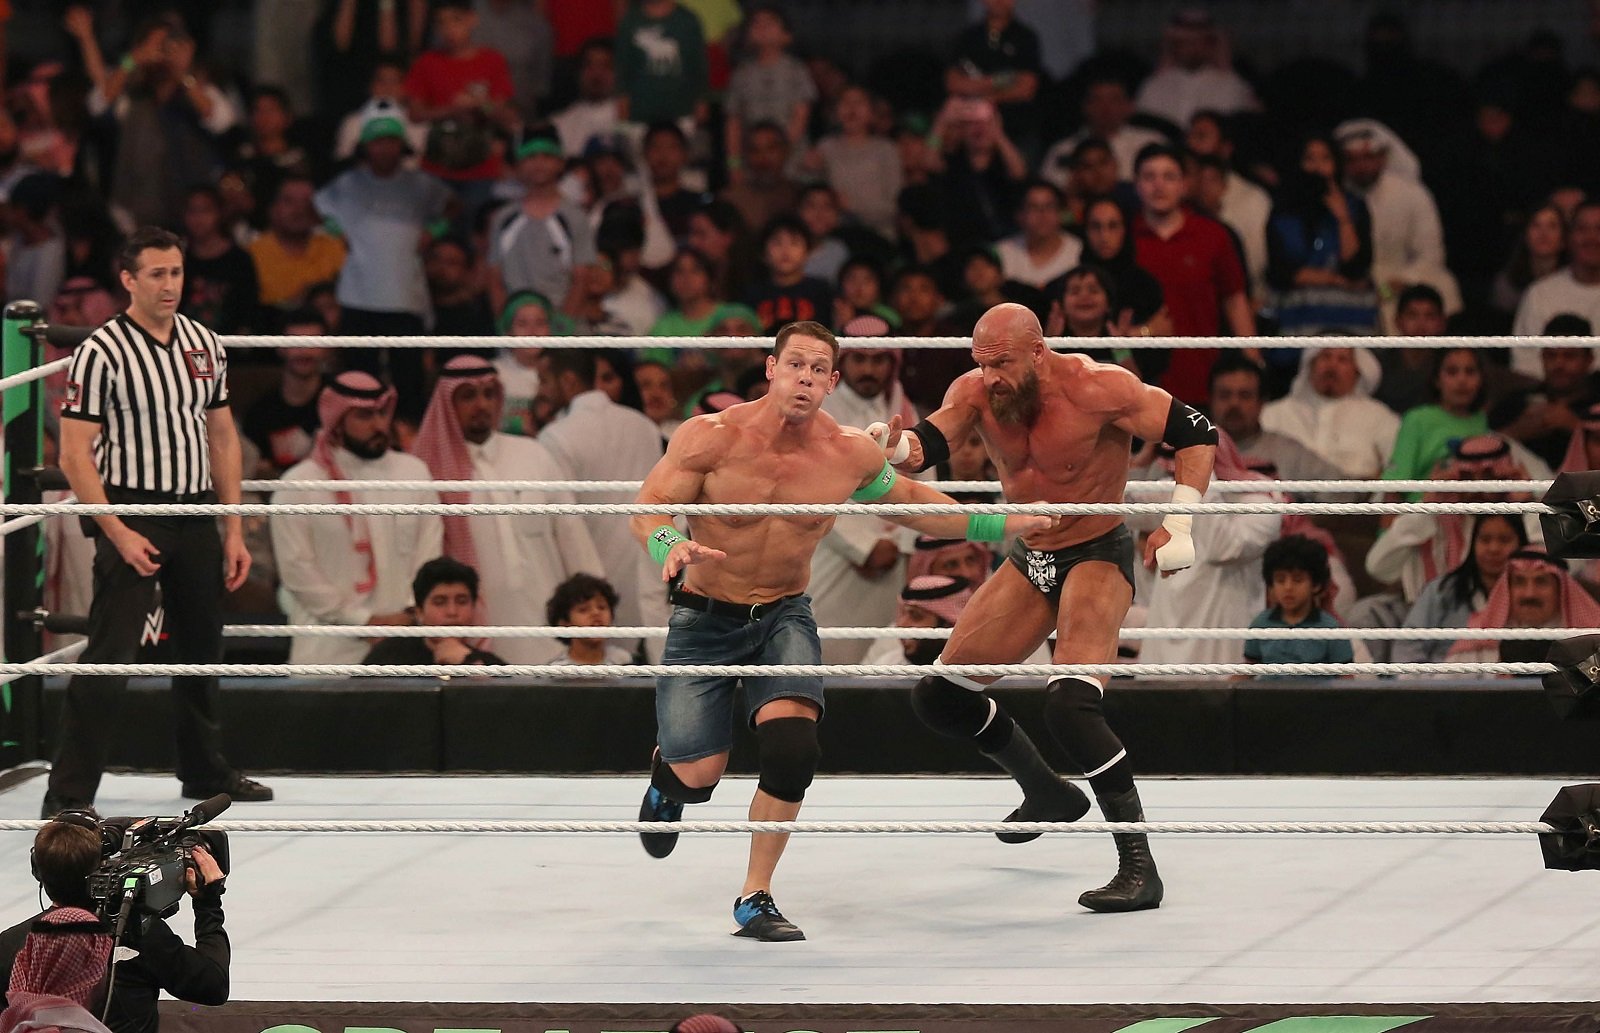 John Cena and Triple H